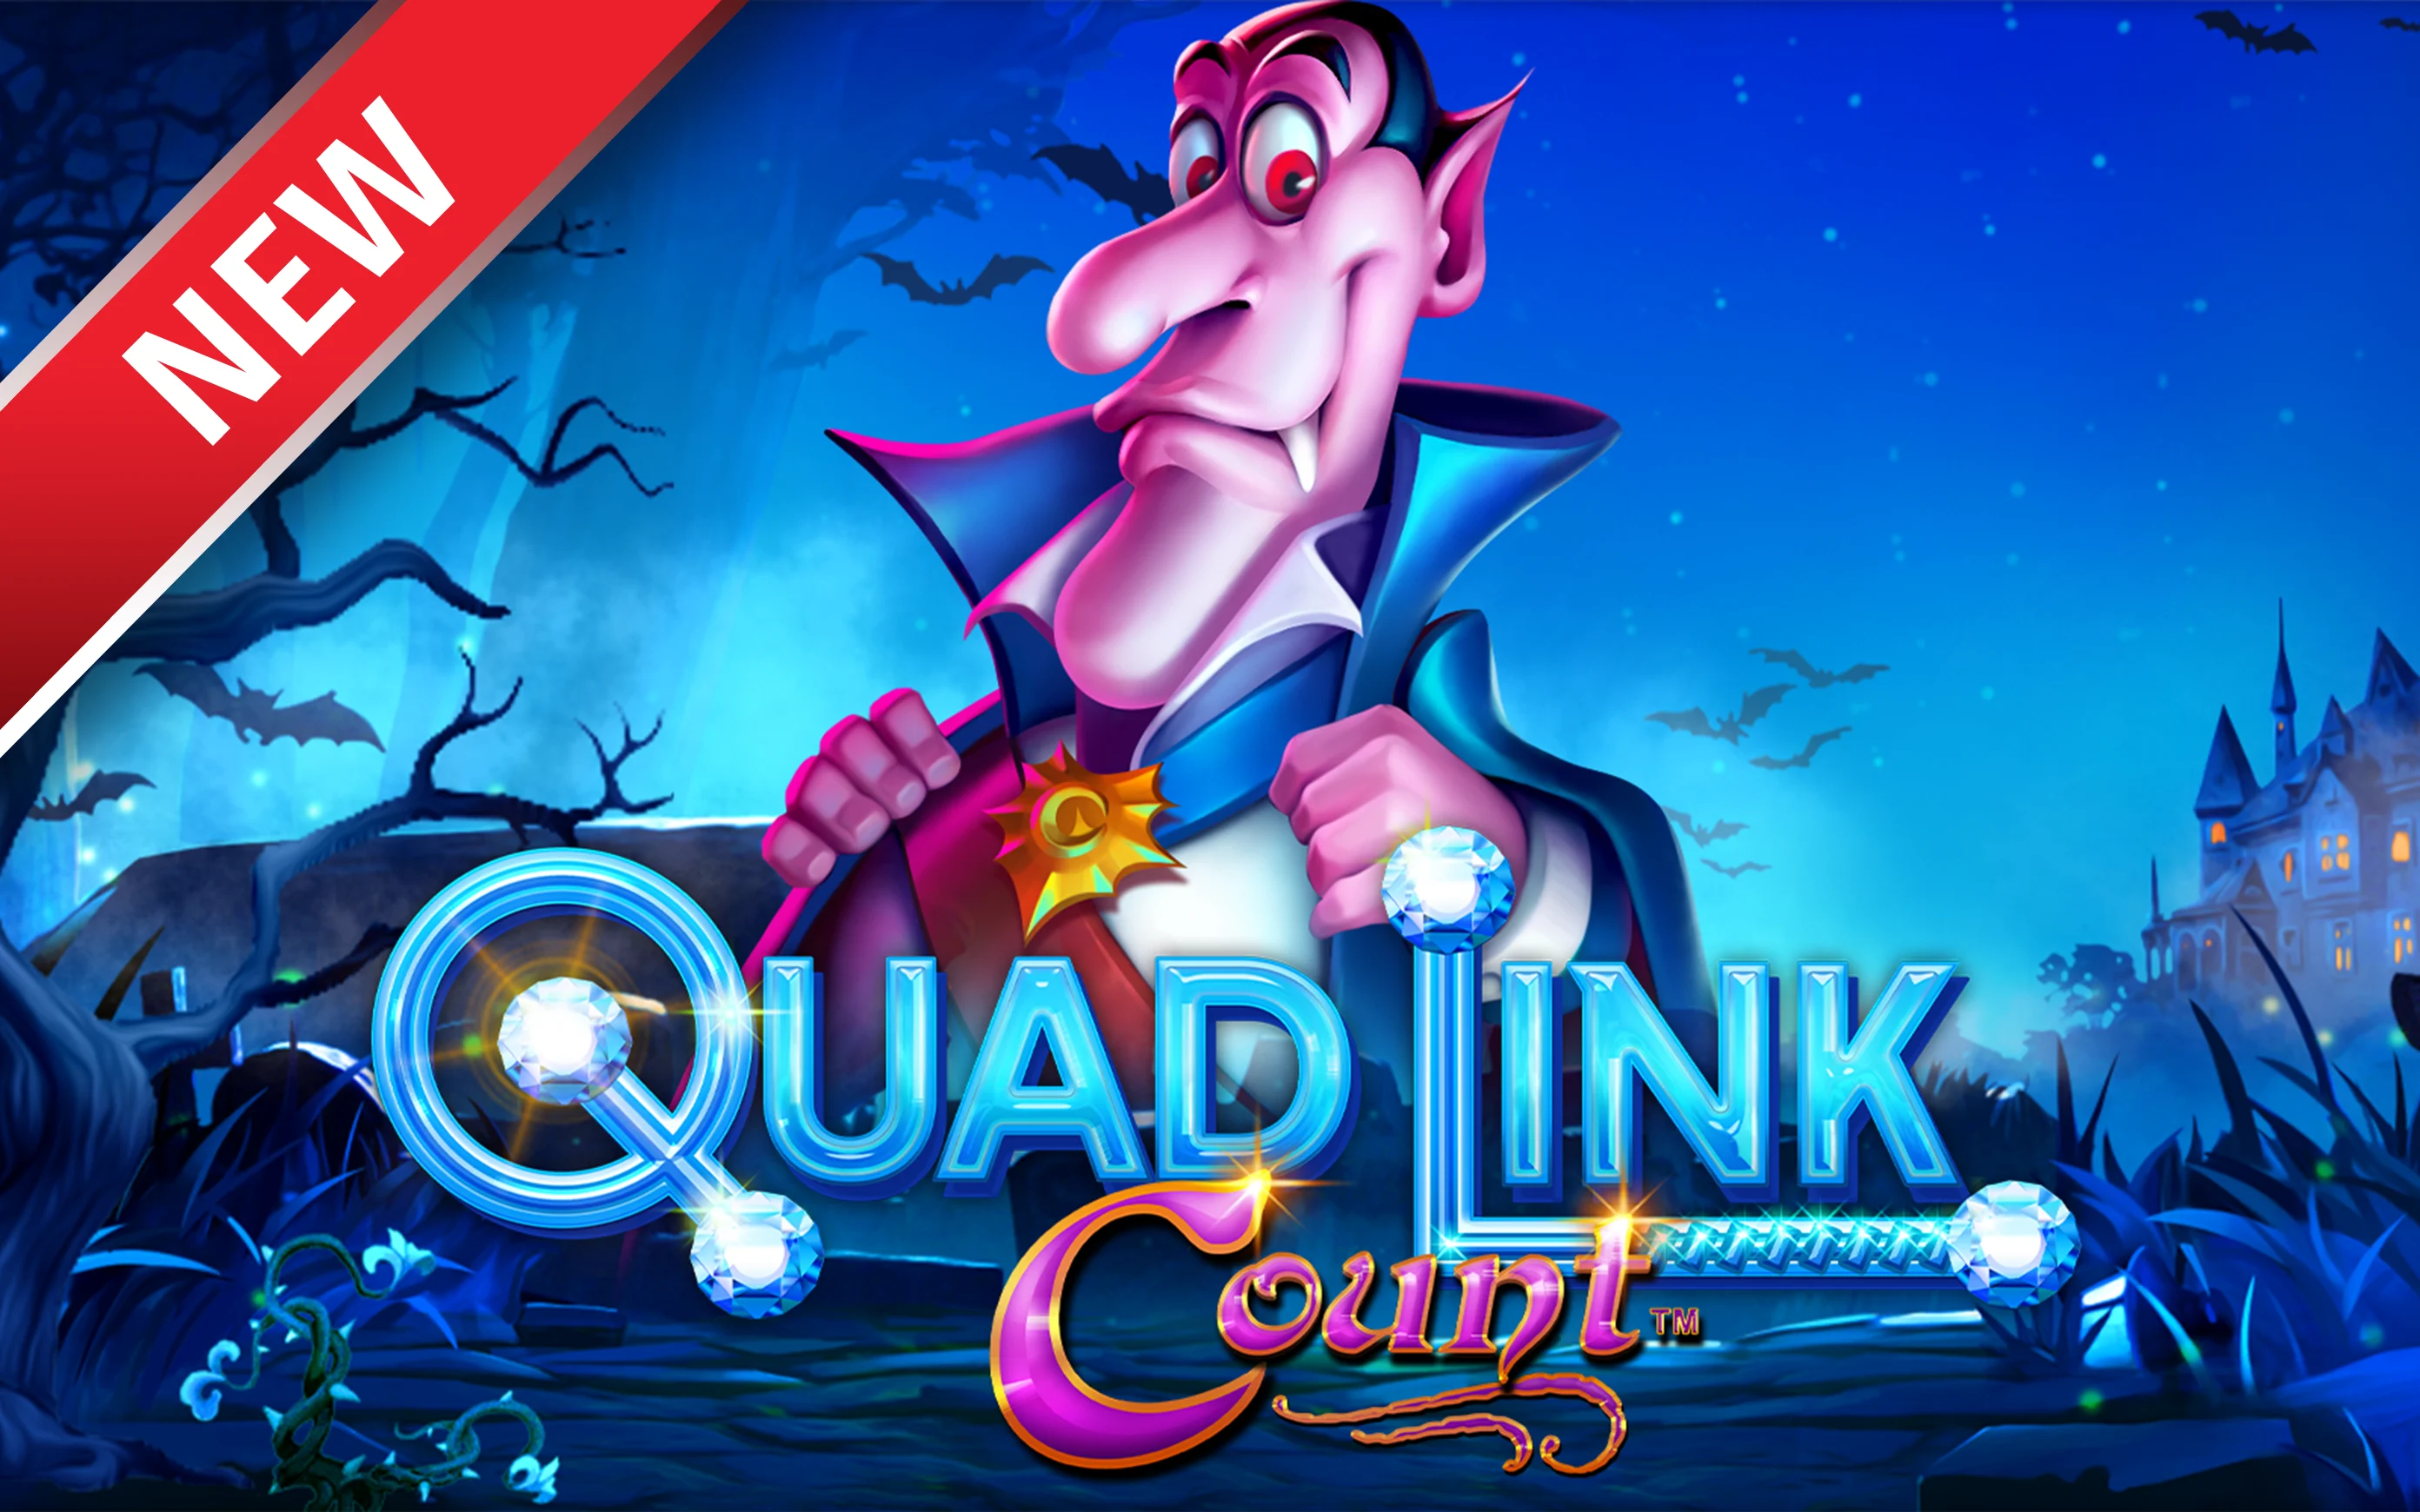 Starcasino.be online casino üzerinden Quad Link: Count™ oynayın